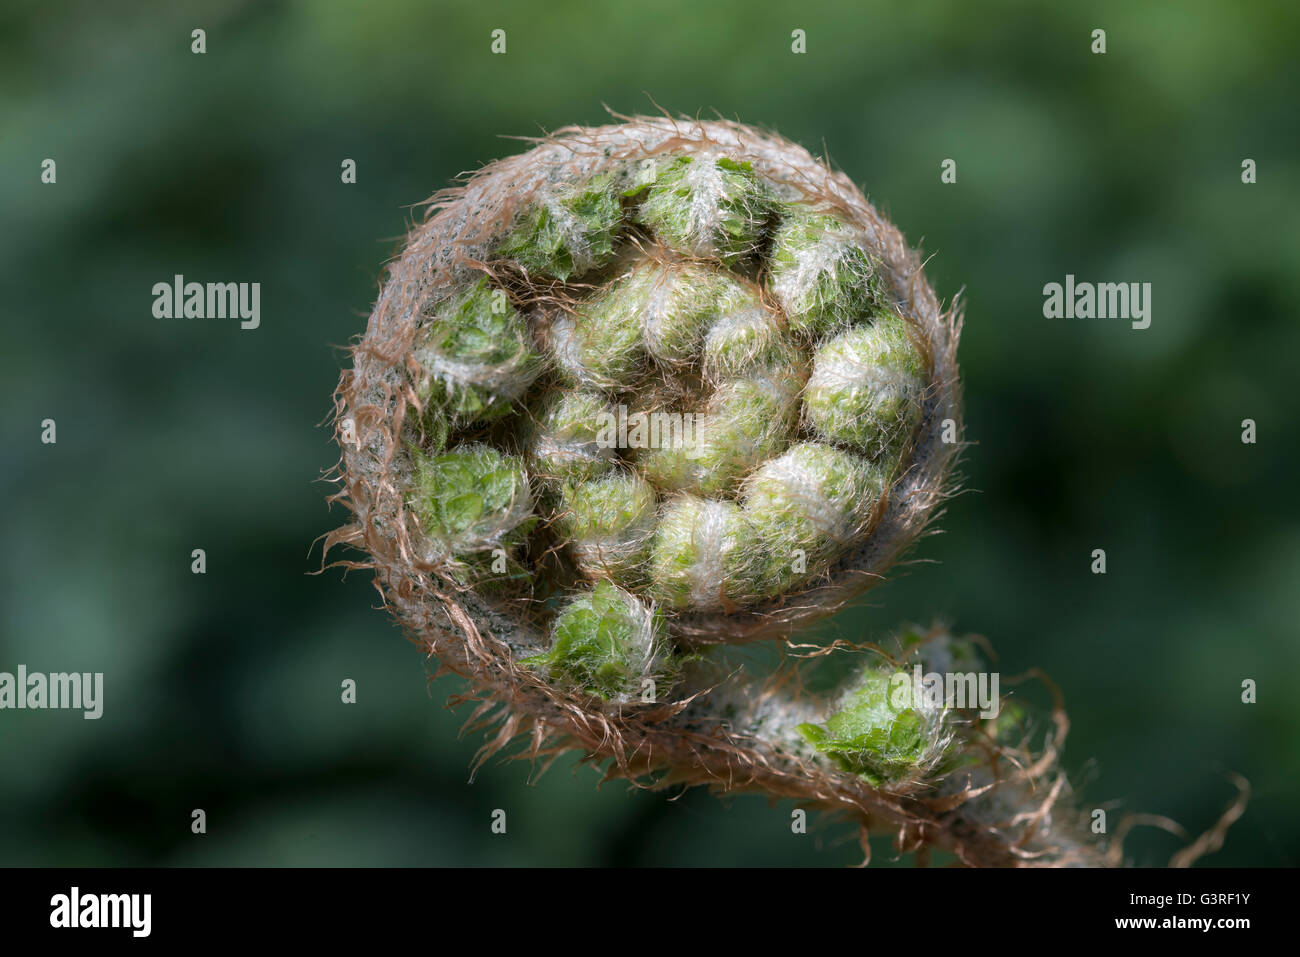 Unfurling fern frond seen in close up. Stock Photo